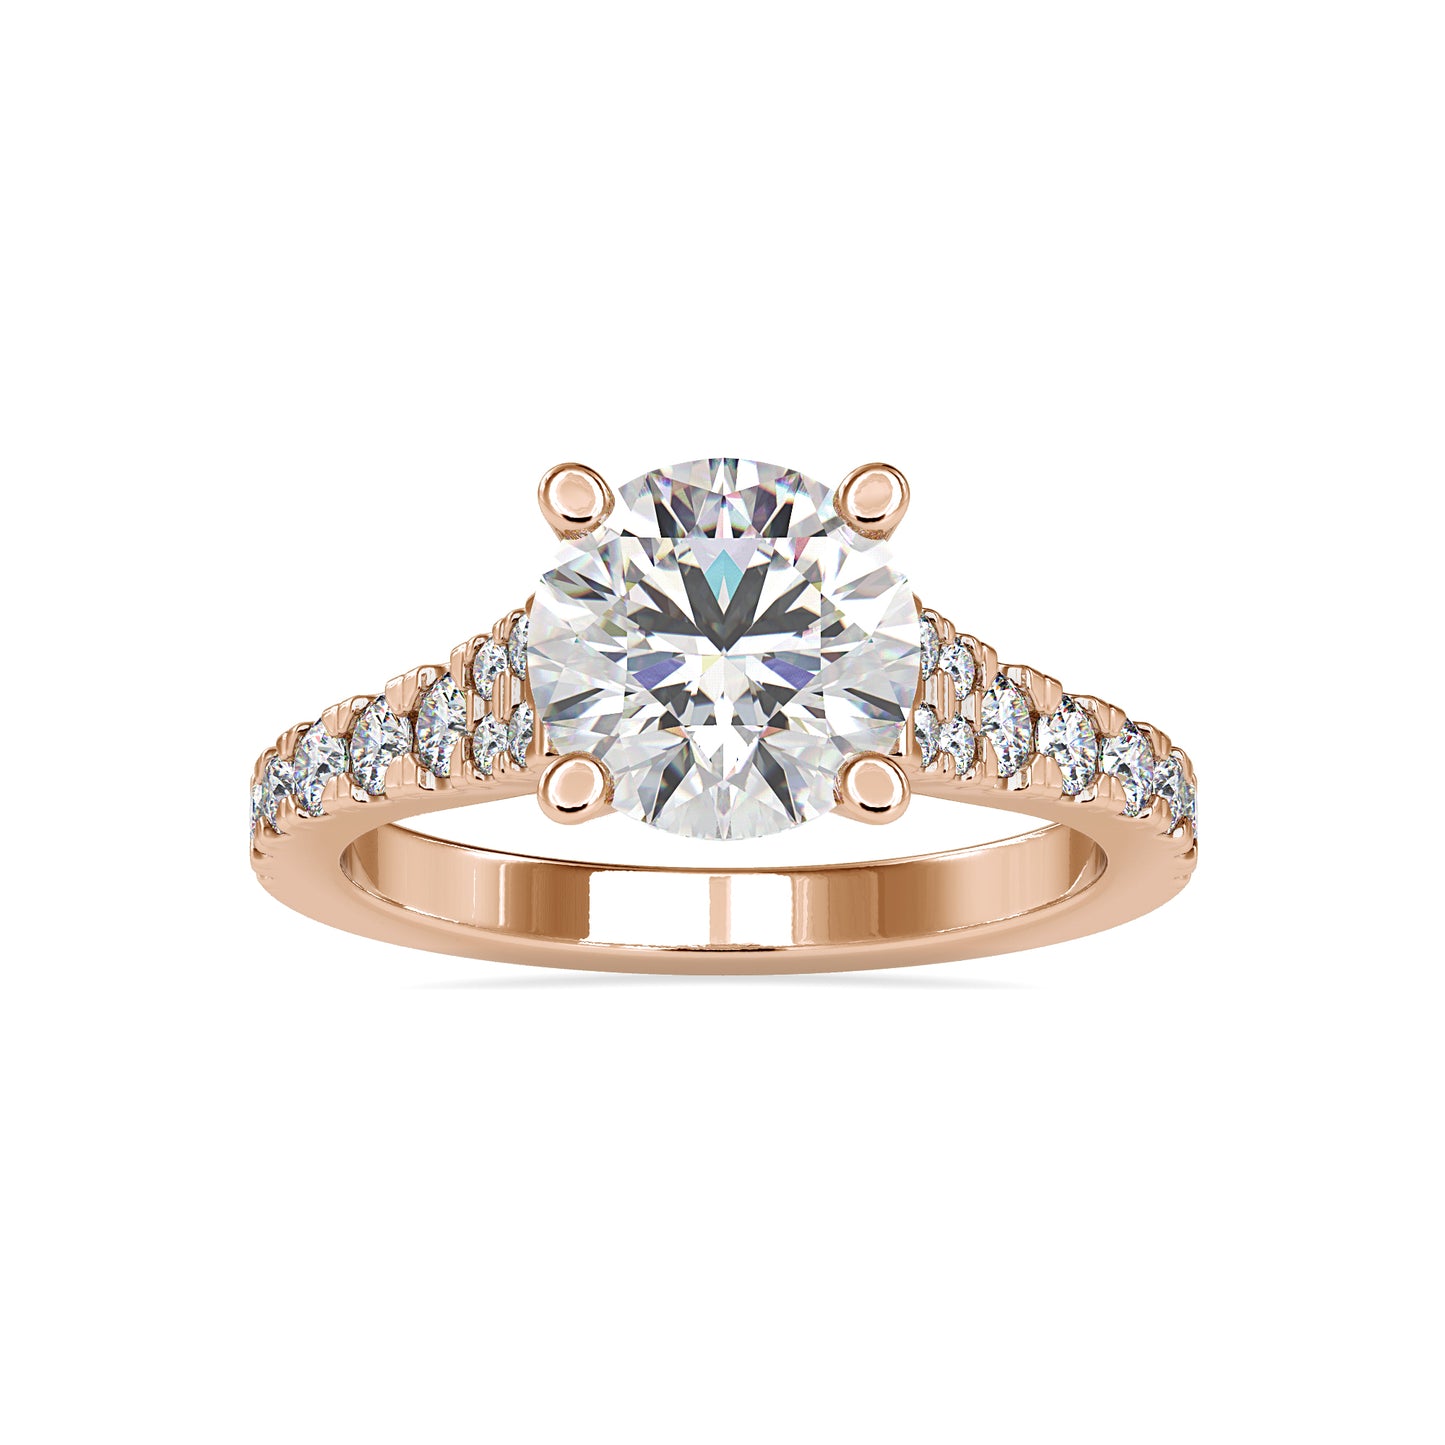 The Aura Ring - Vai Ra moissanite diamond